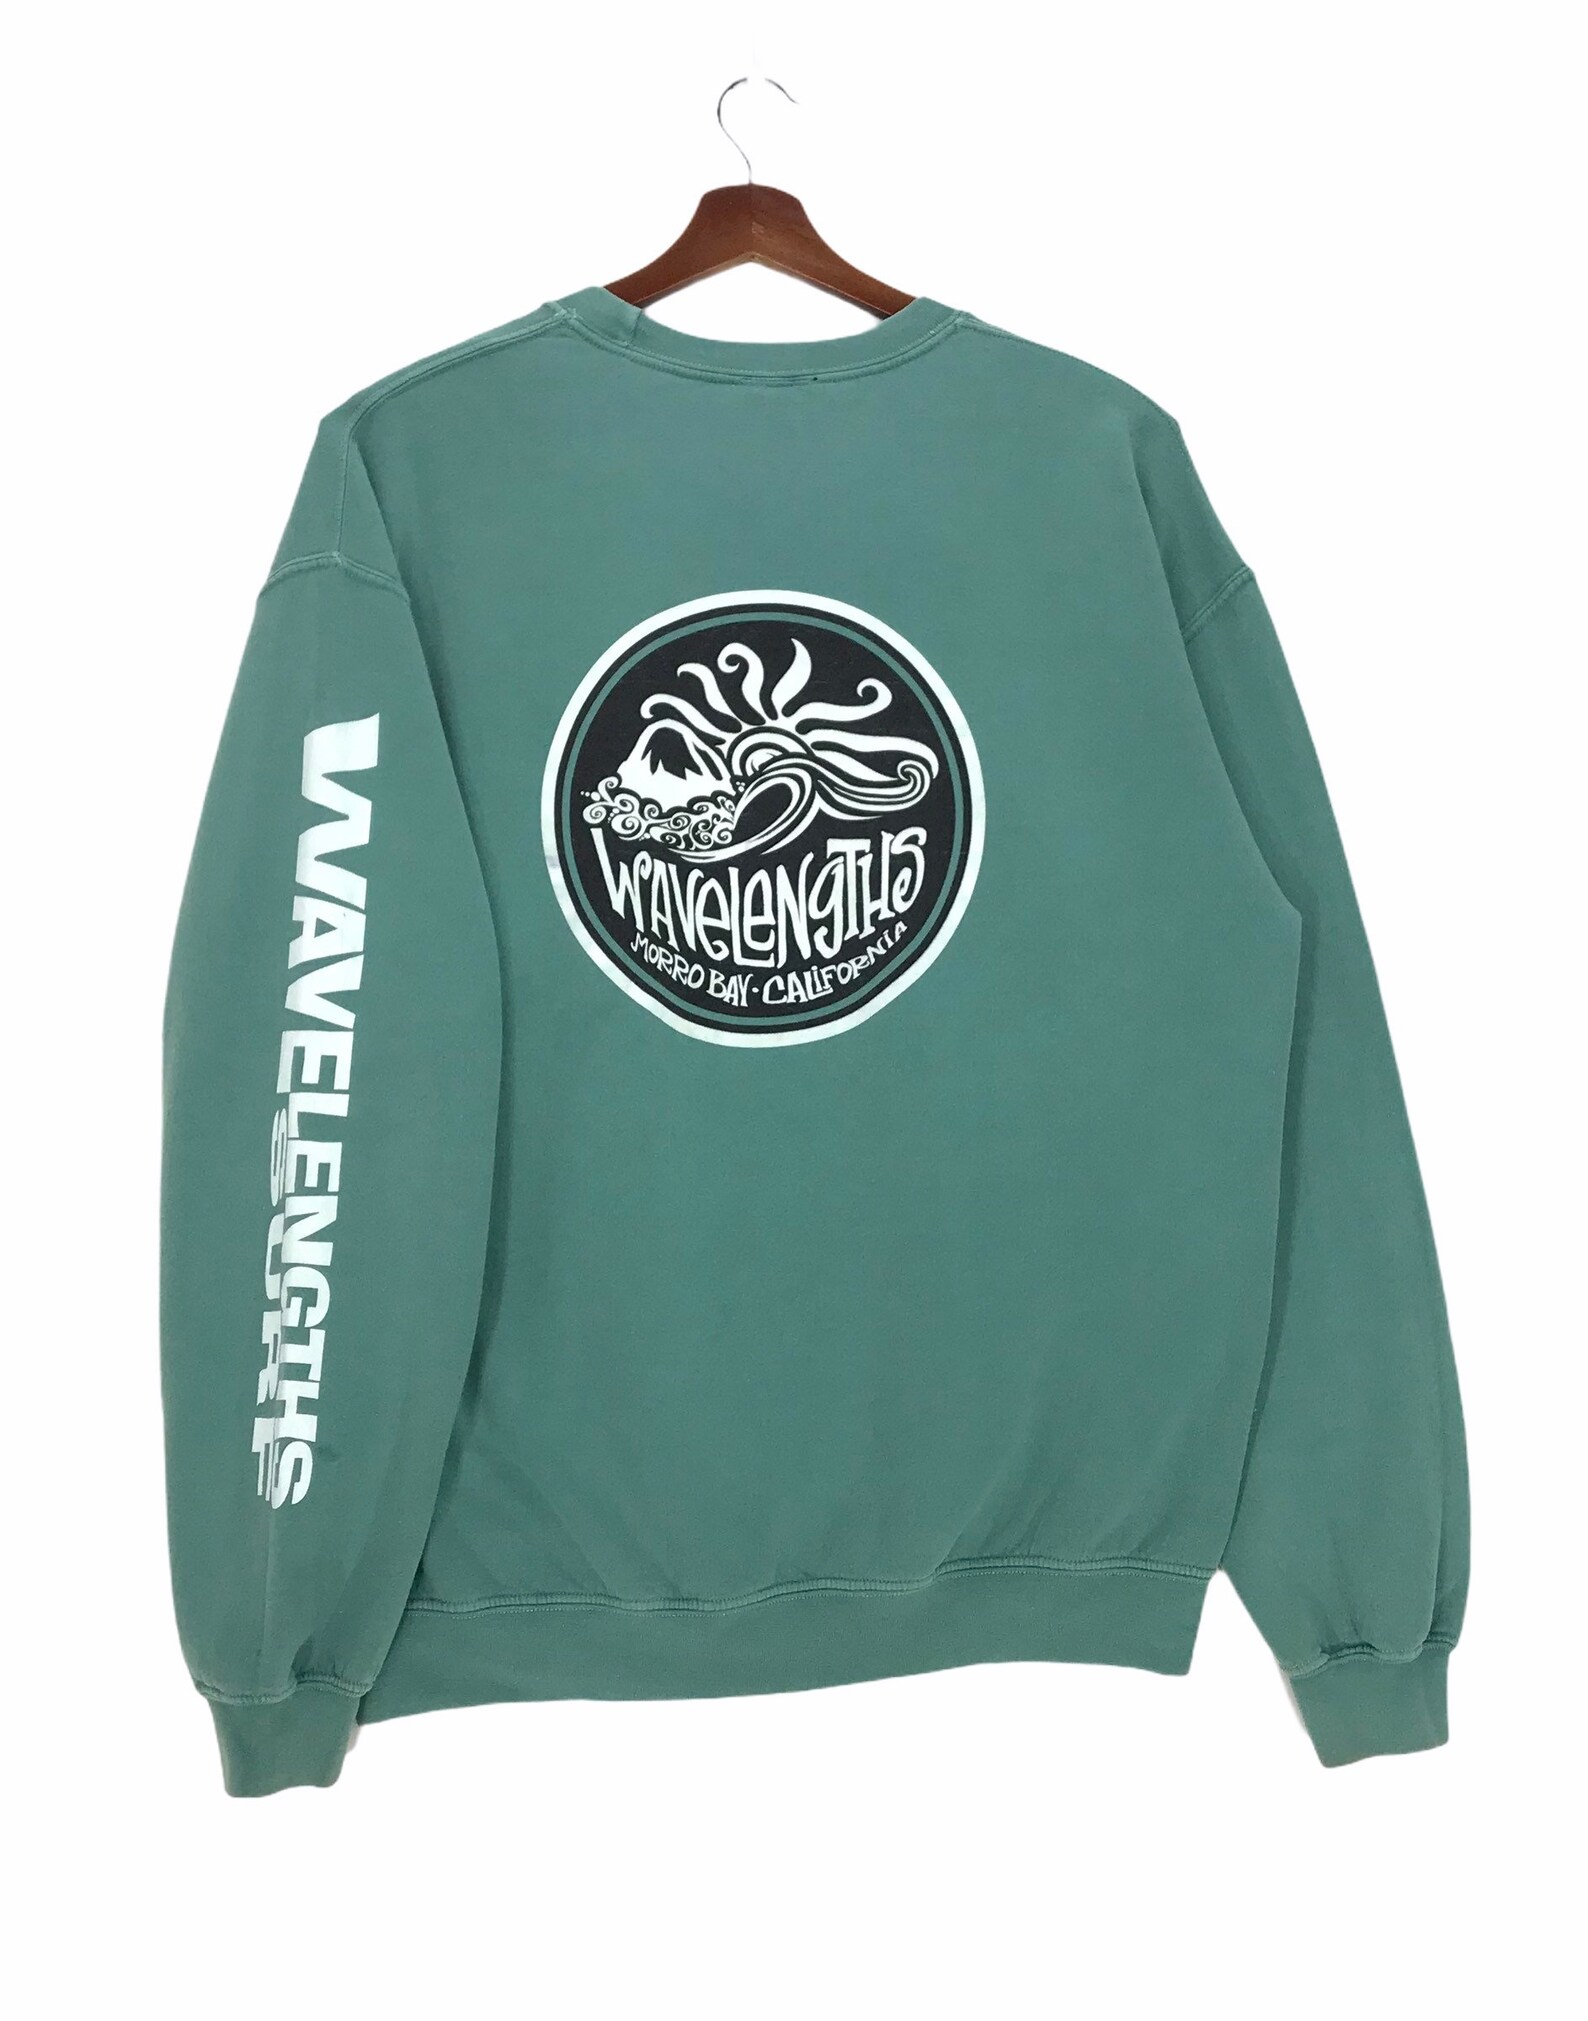 Vintage Wavelengths Surf Shop Morro Bay California Sweatshirt - Etsy